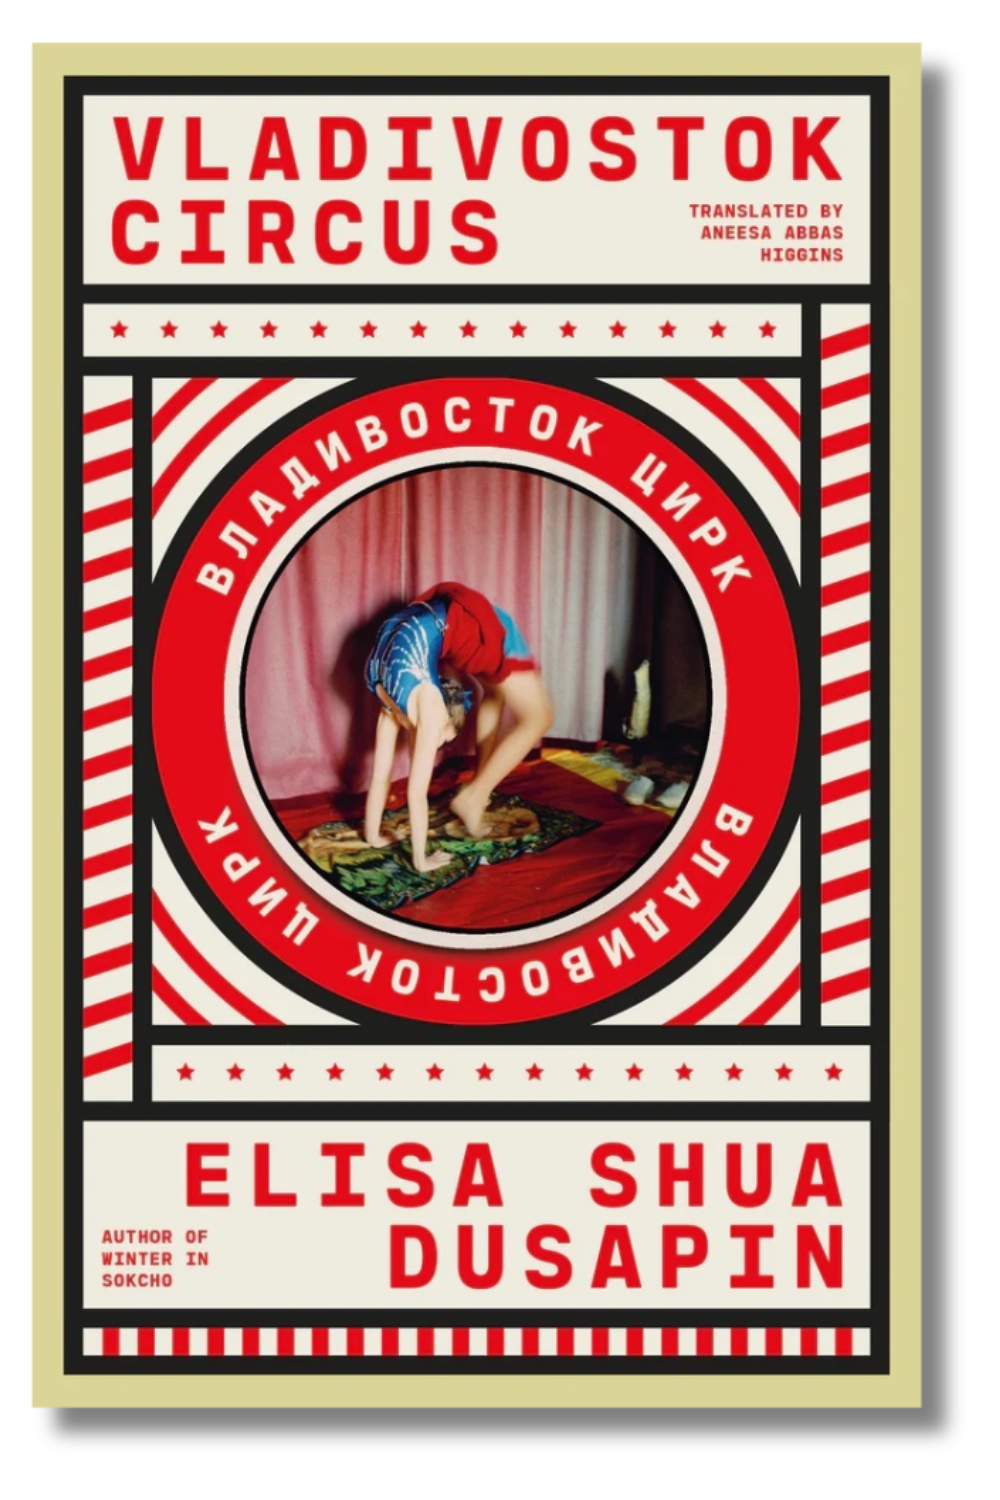 The cover of "Vladivostok Circus" by Elisa Shua Dusapin, tr. by Aneesa Abbas Higgins